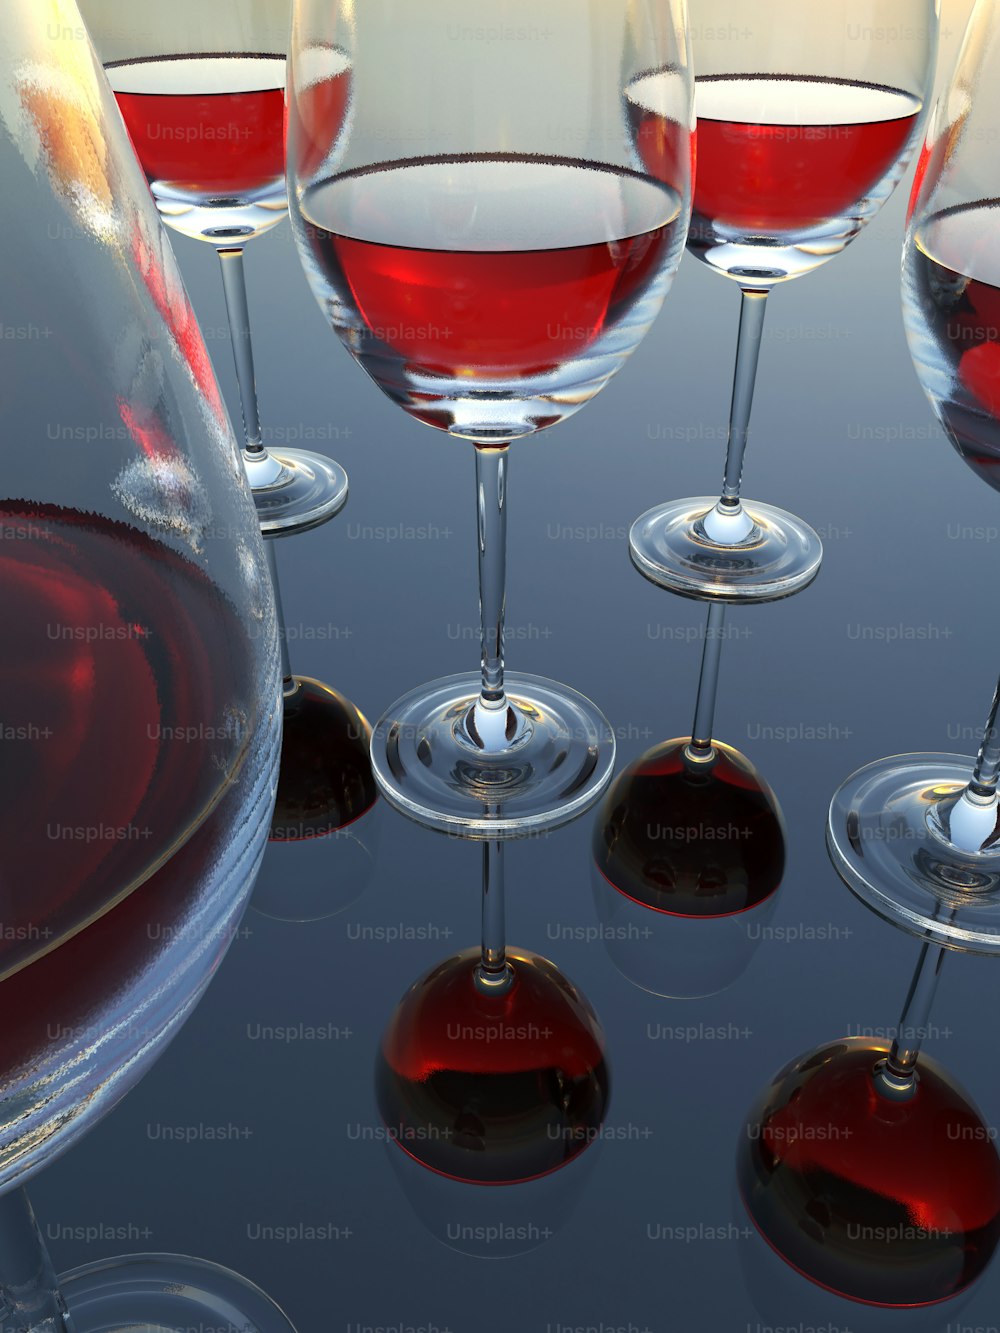 Un grupo de copas de vino llenas de vino tinto